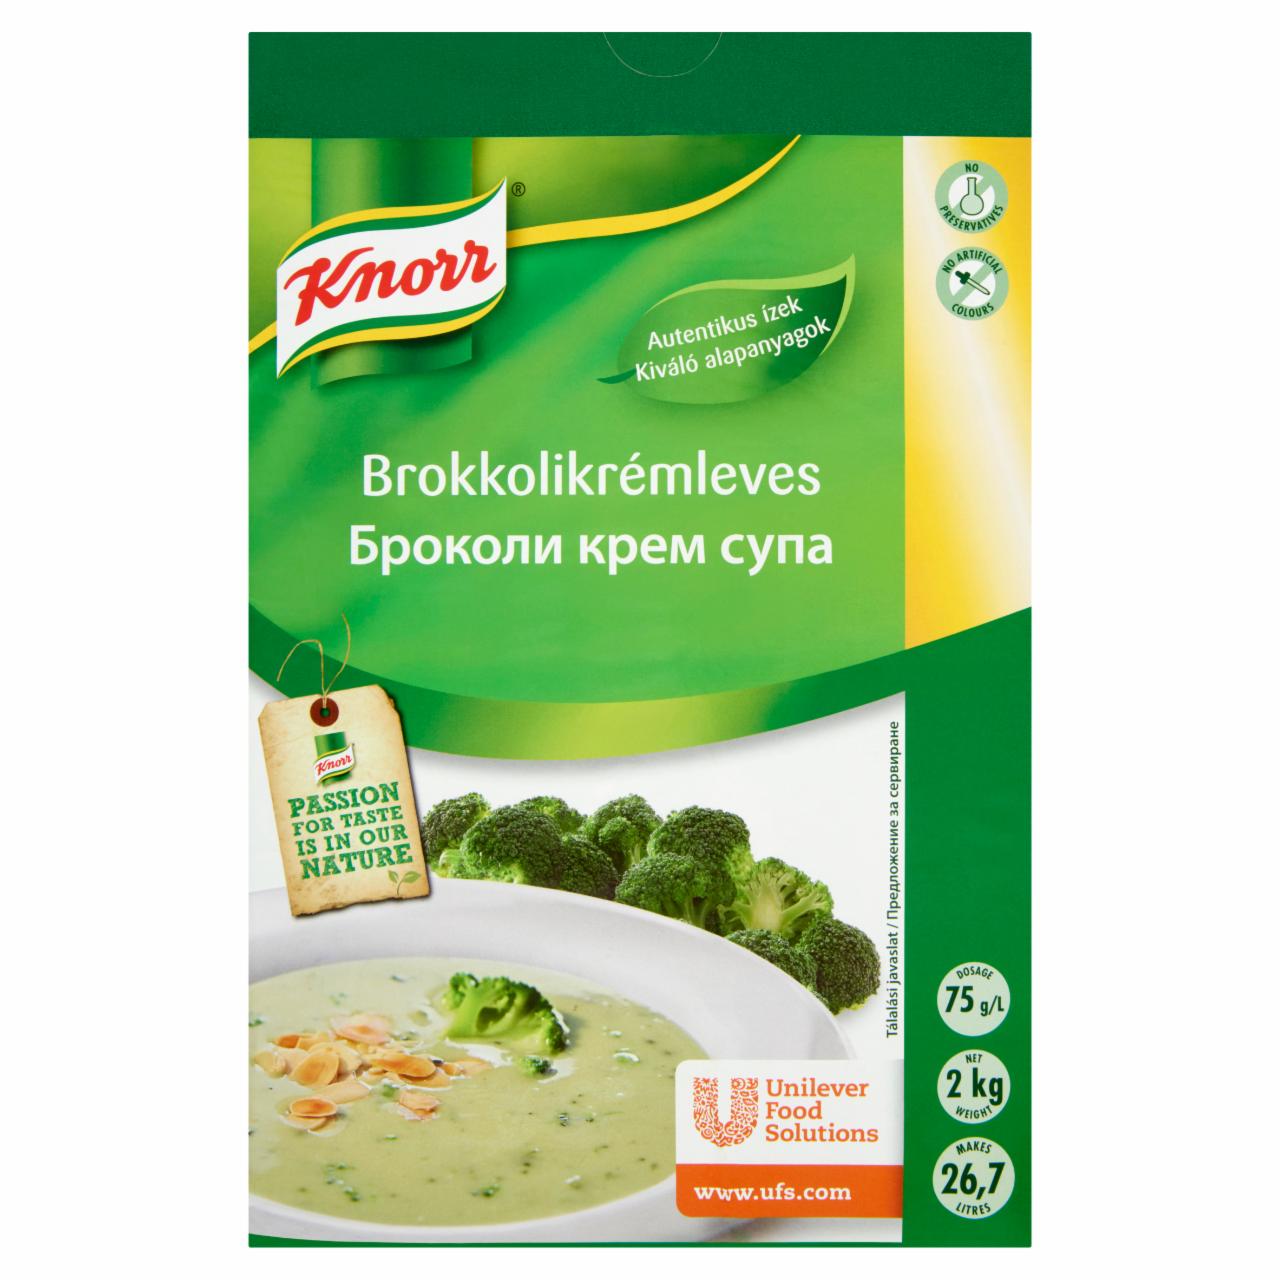 Képek - Knorr brokkolikrémleves 2 kg